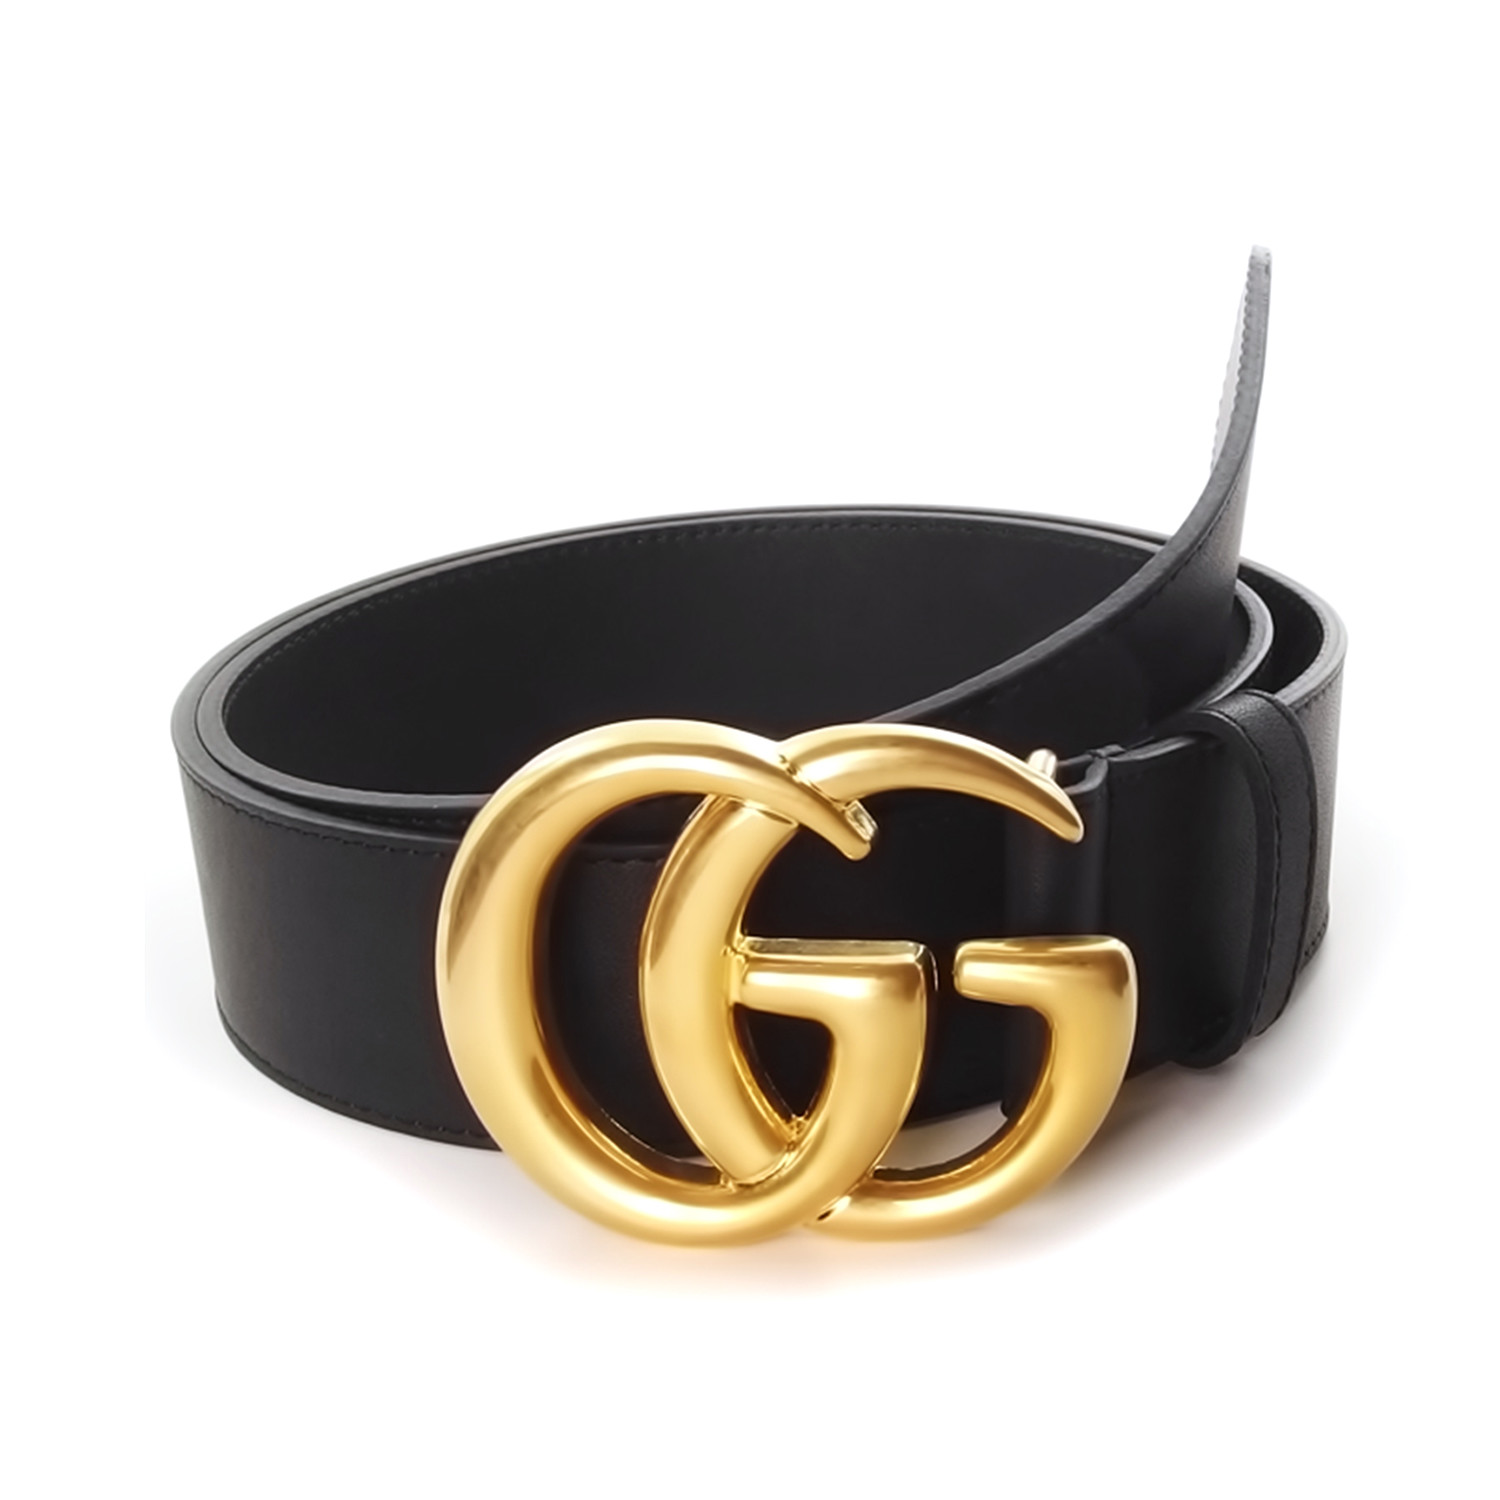 black and gold gg belt